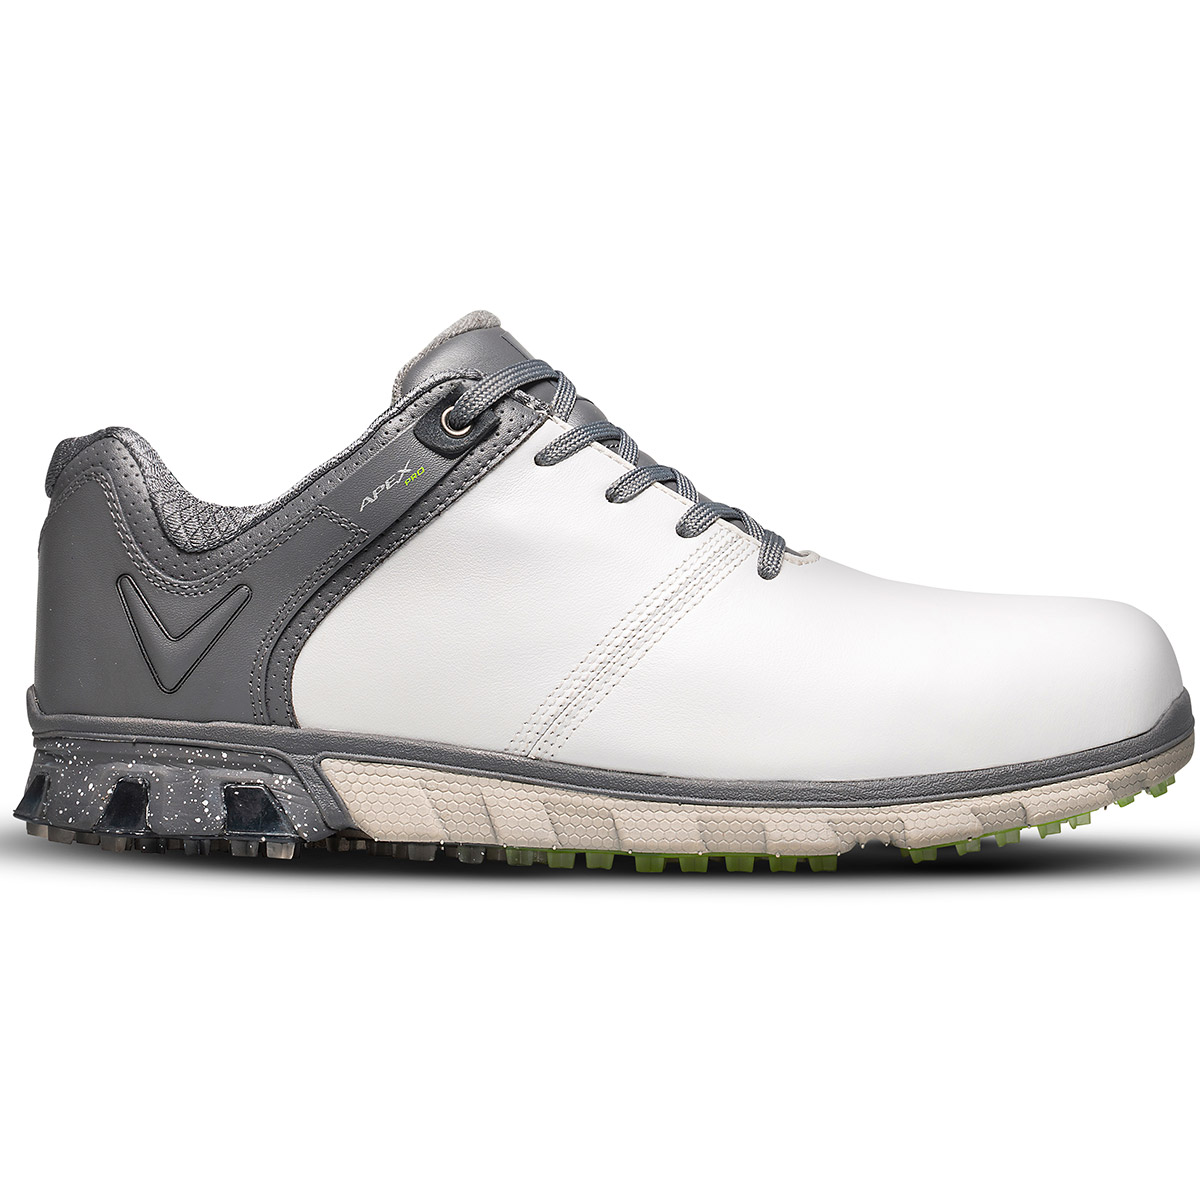 Callaway Golf Apex Pro Shoes | Online Golf